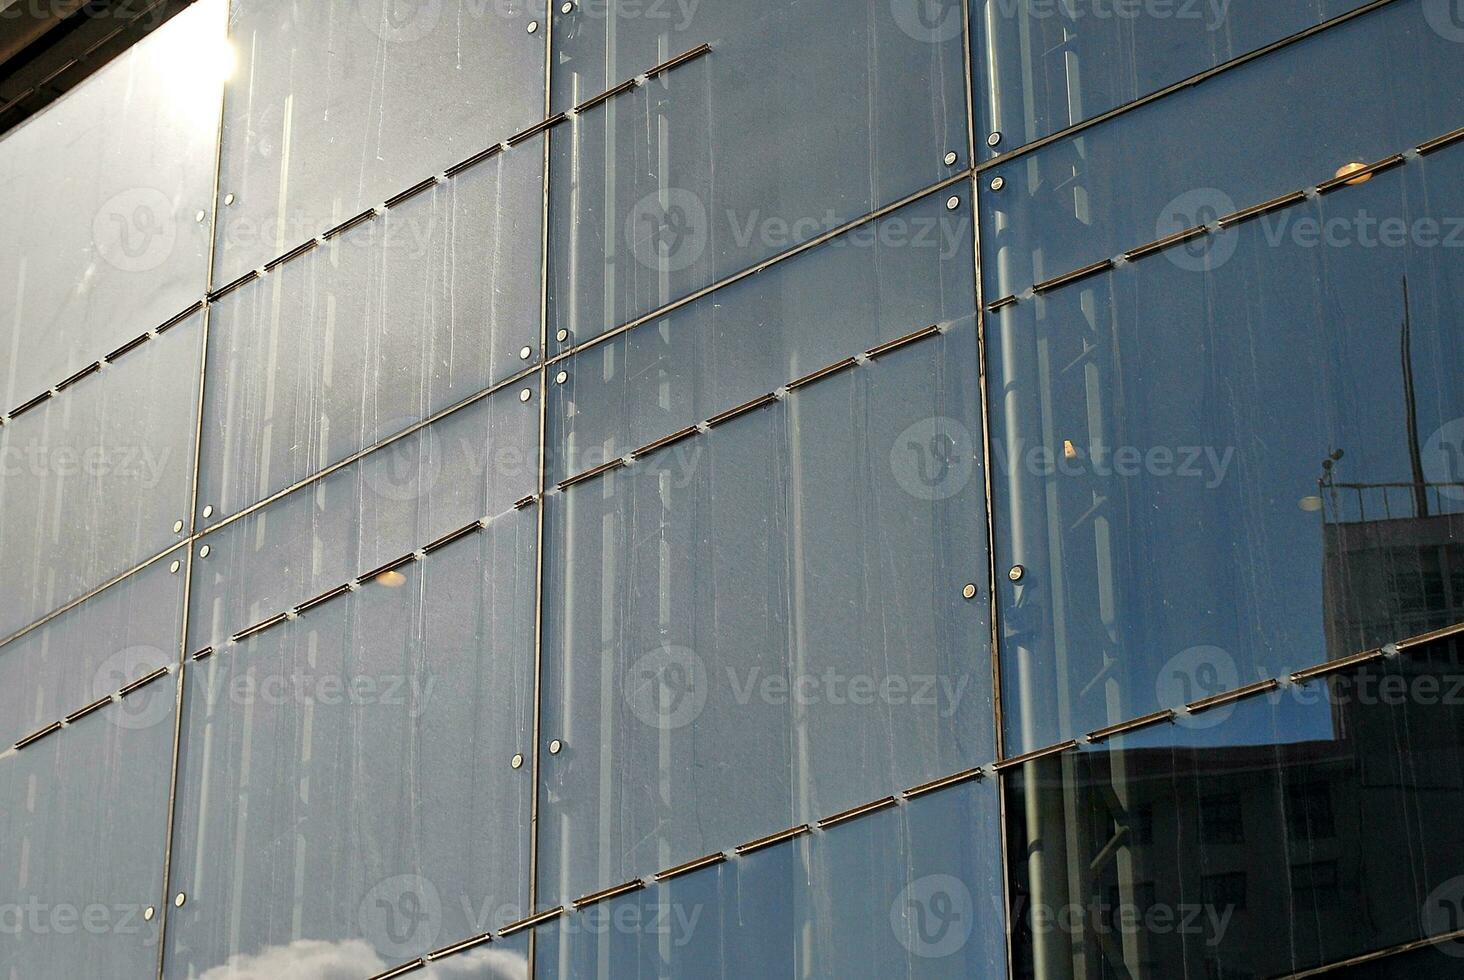 estrutural vidro parede refletindo azul céu. abstrato moderno arquitetura fragmento. foto